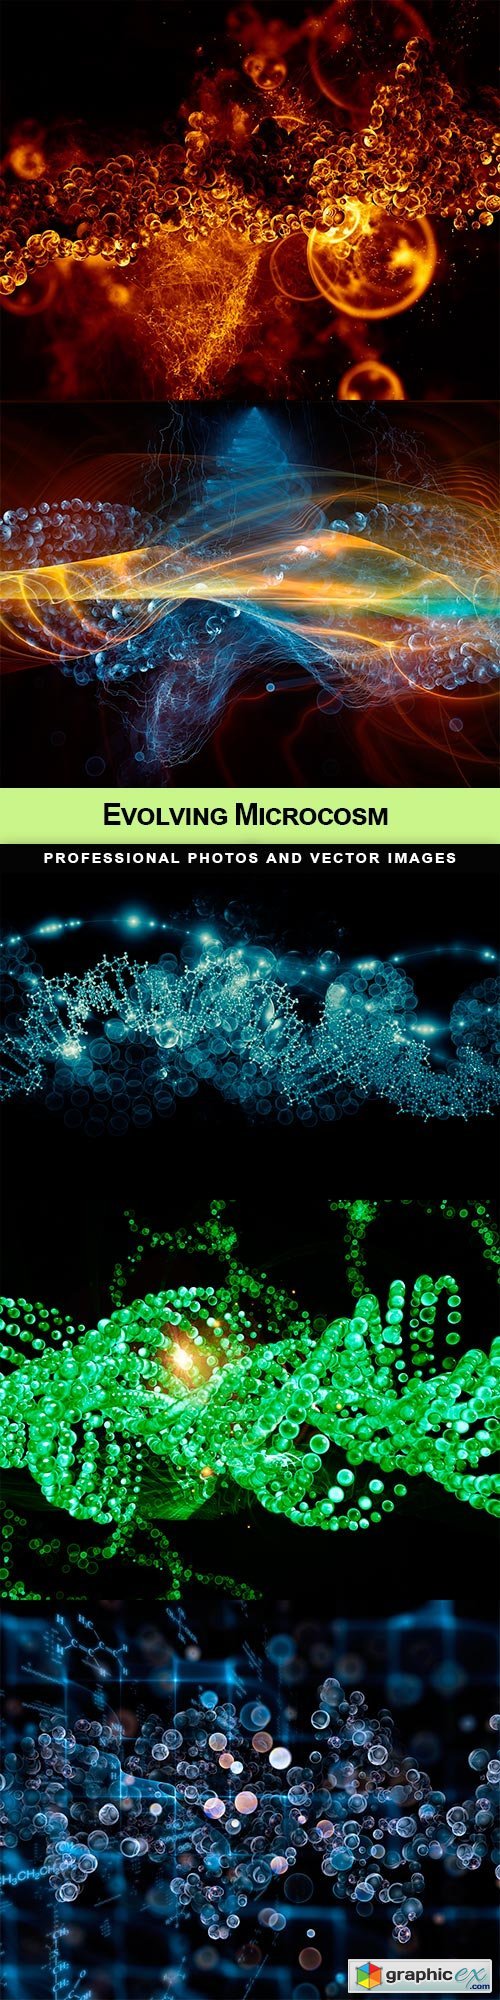 Evolving Microcosm - 5 UHQ JPEG